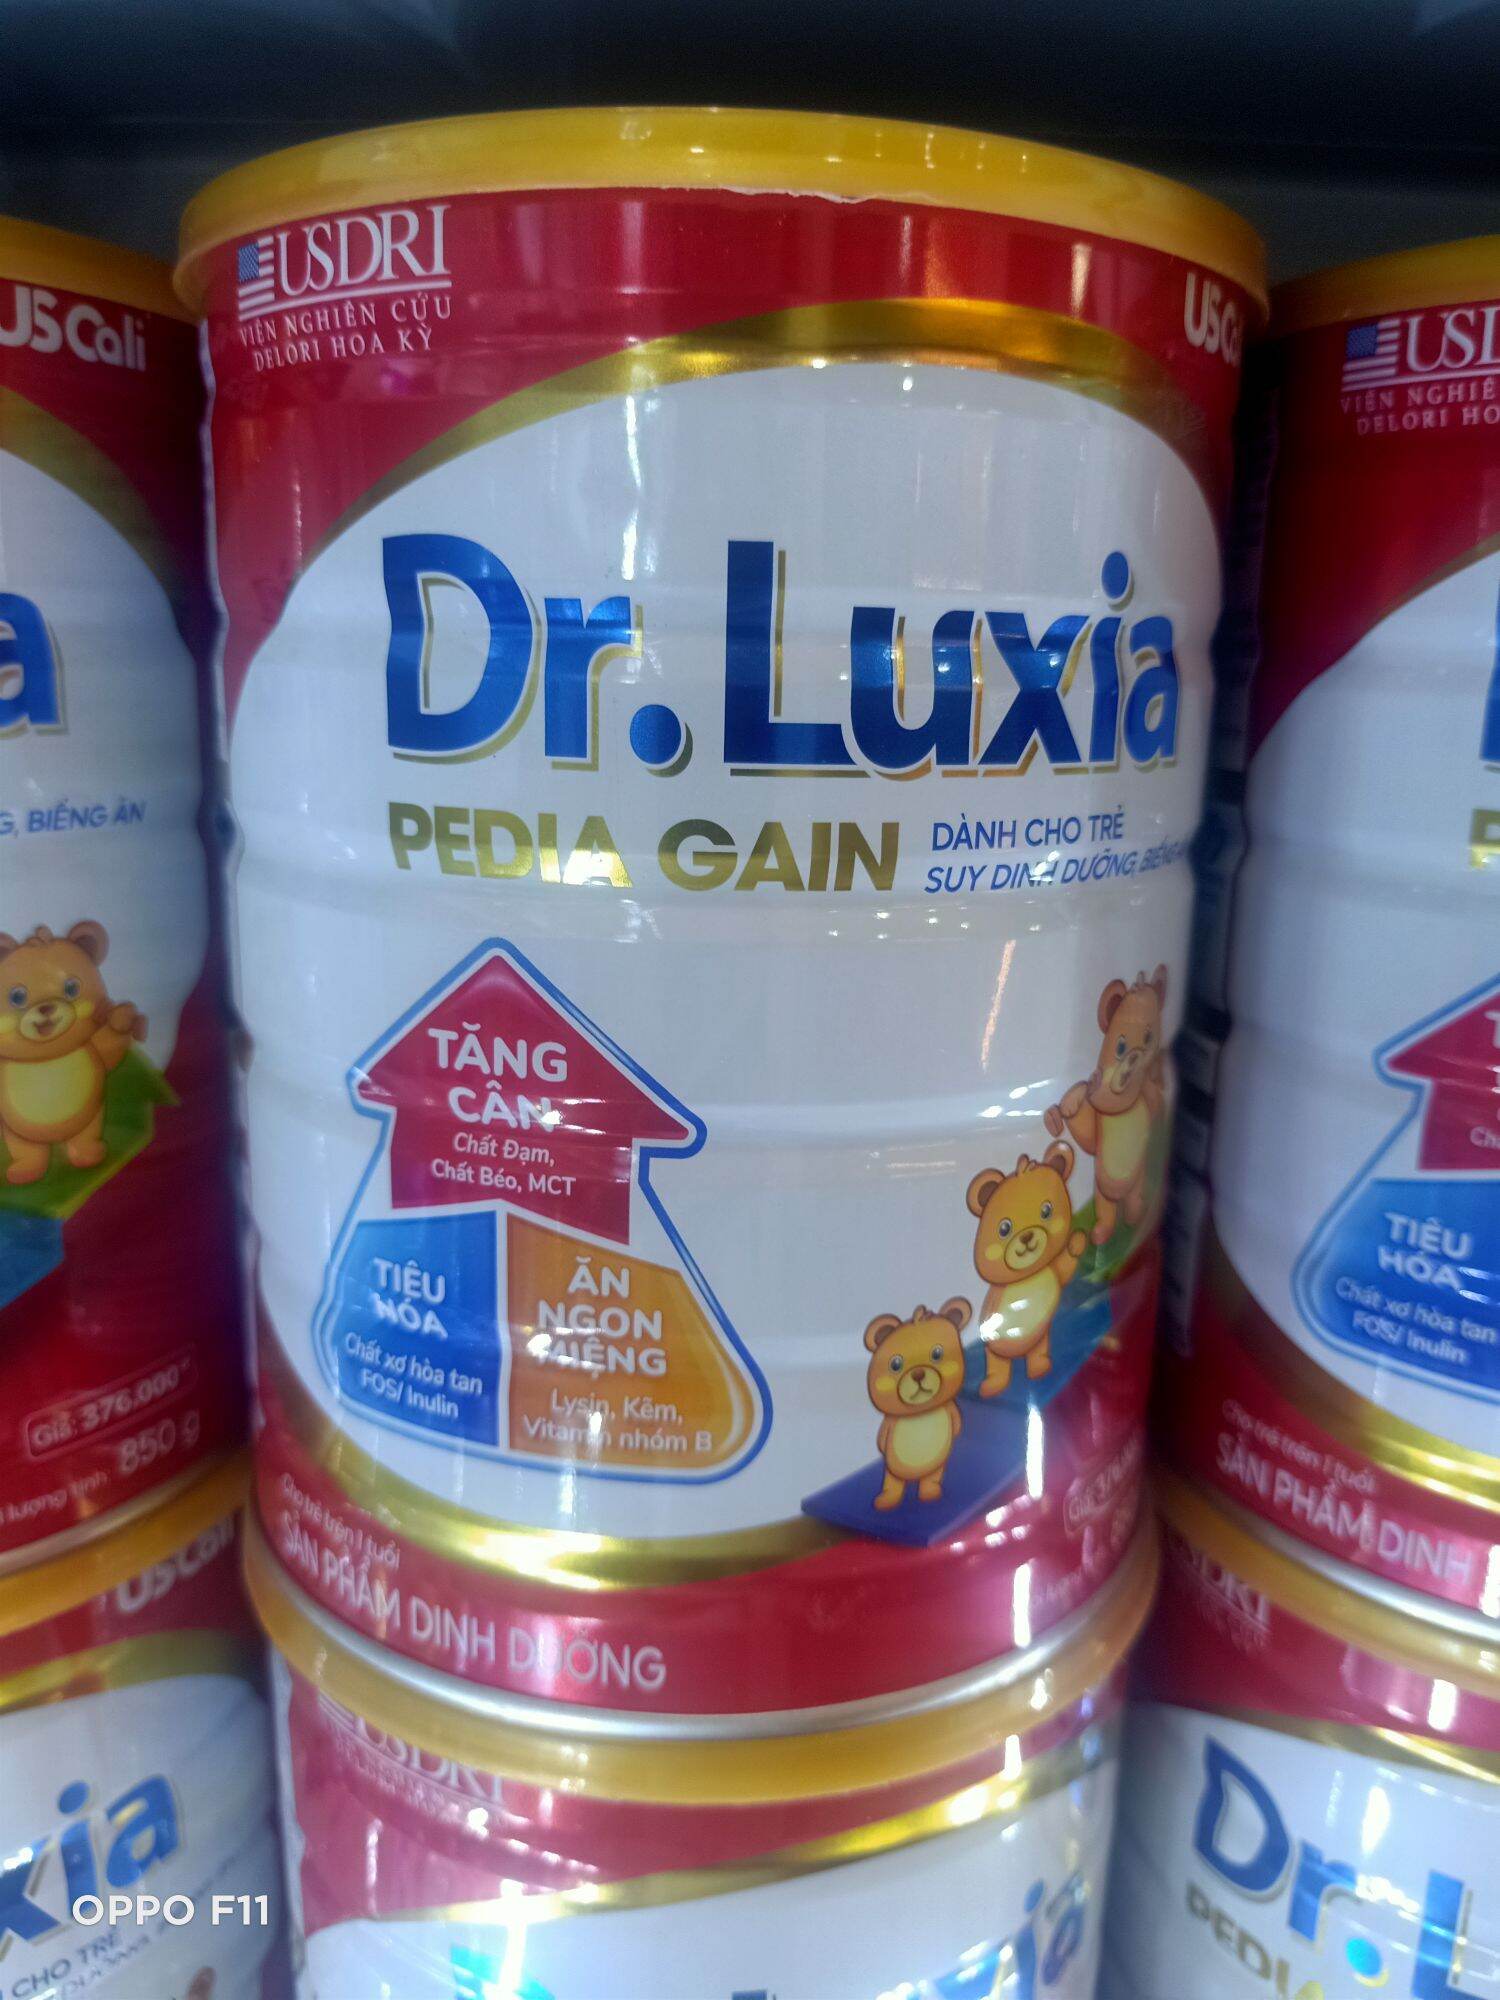 sữa bột Dr luxia pedia gain 850g date mới nhất